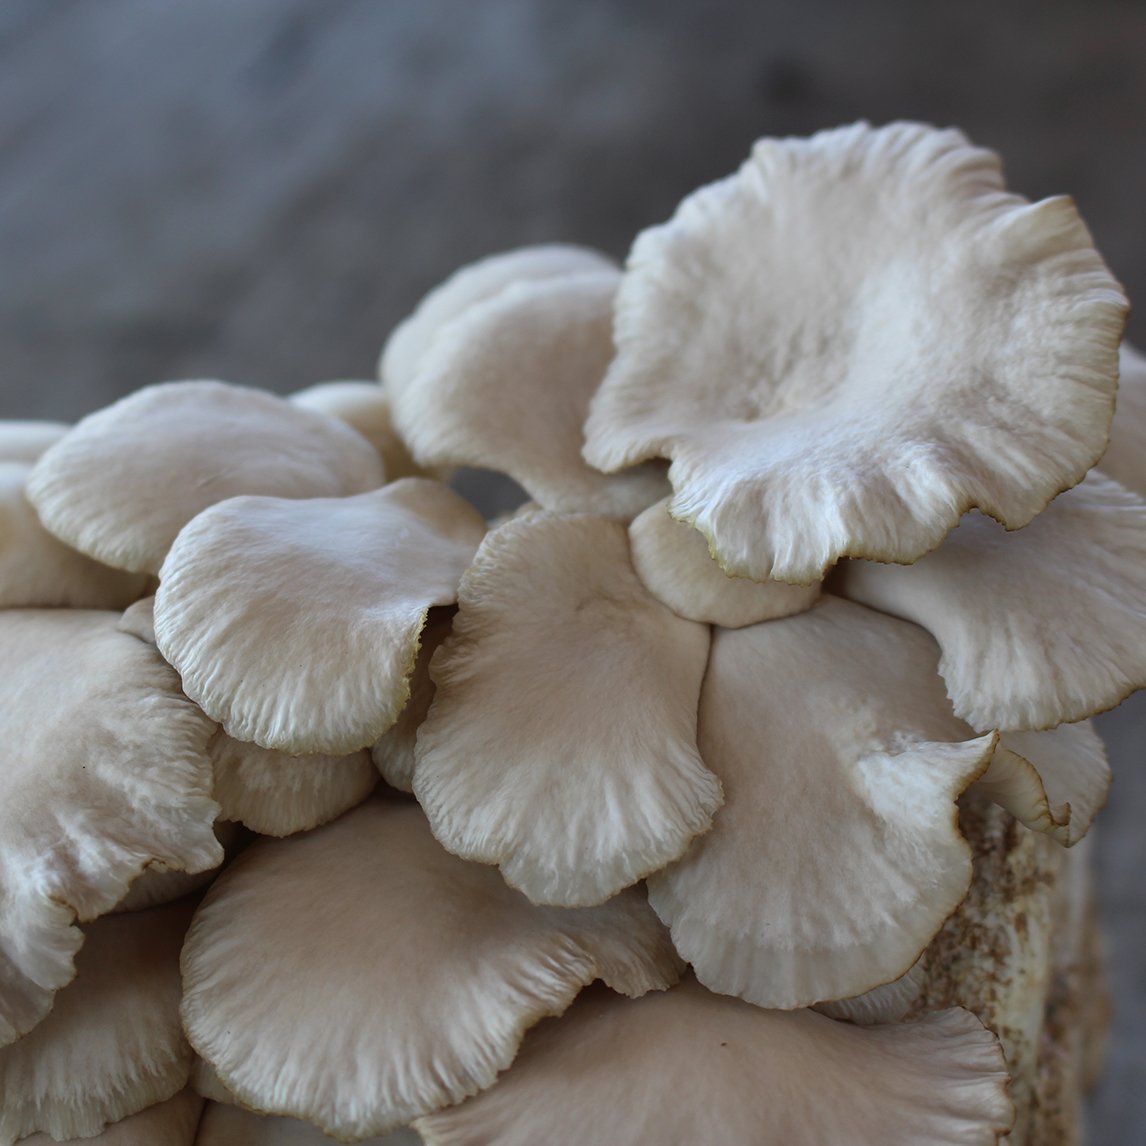 Mushroom Kit - 'Italian Brown Oyster'